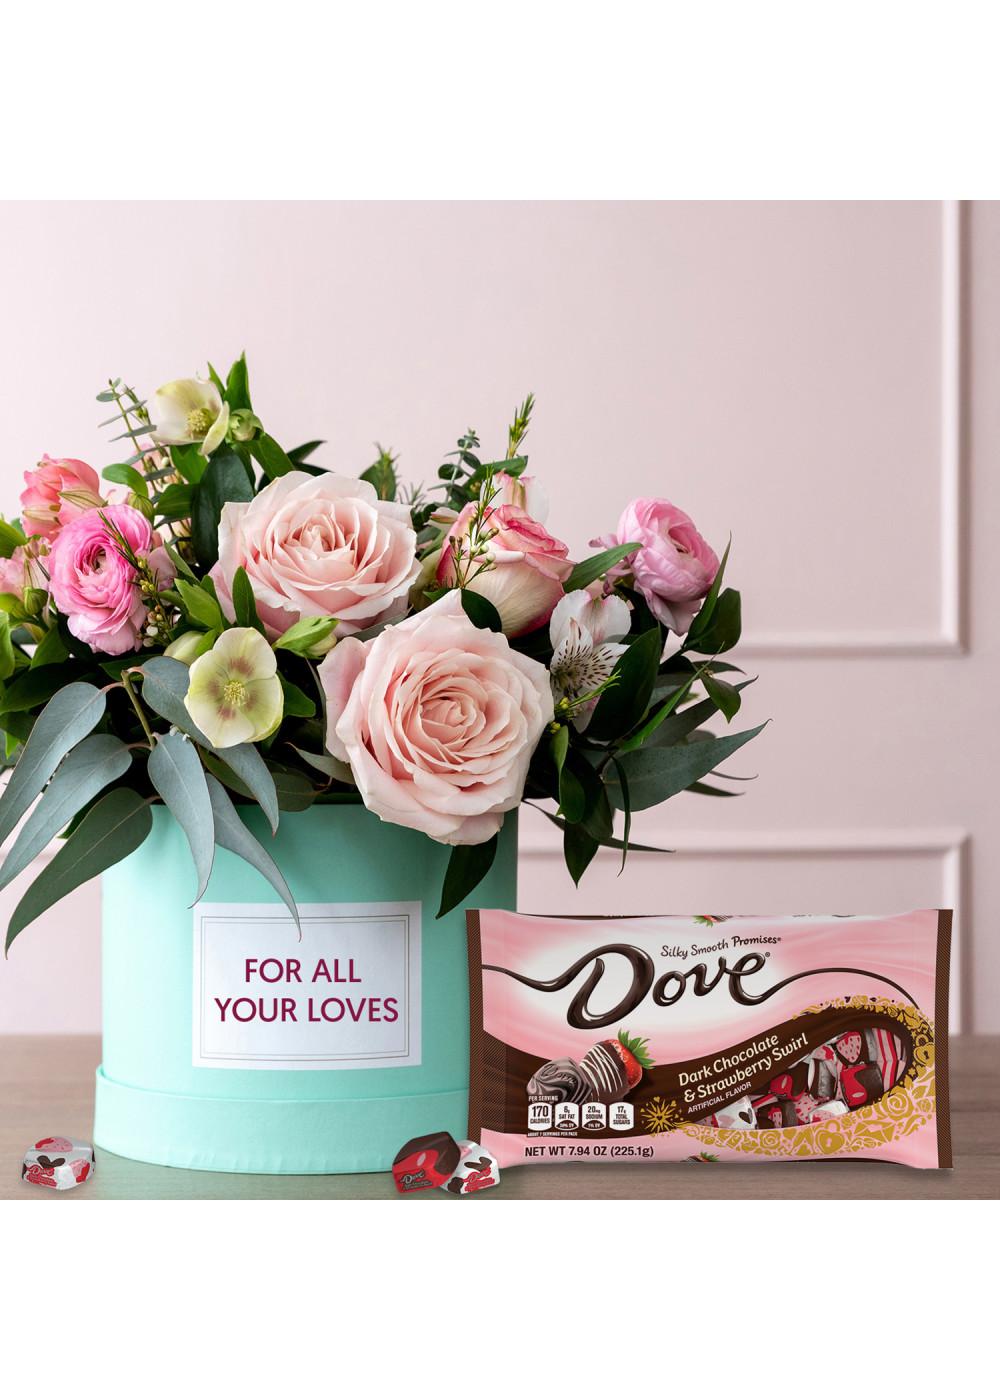 Dove Dark Chocolate & Strawberry Swirl Valentine's Candy; image 2 of 7